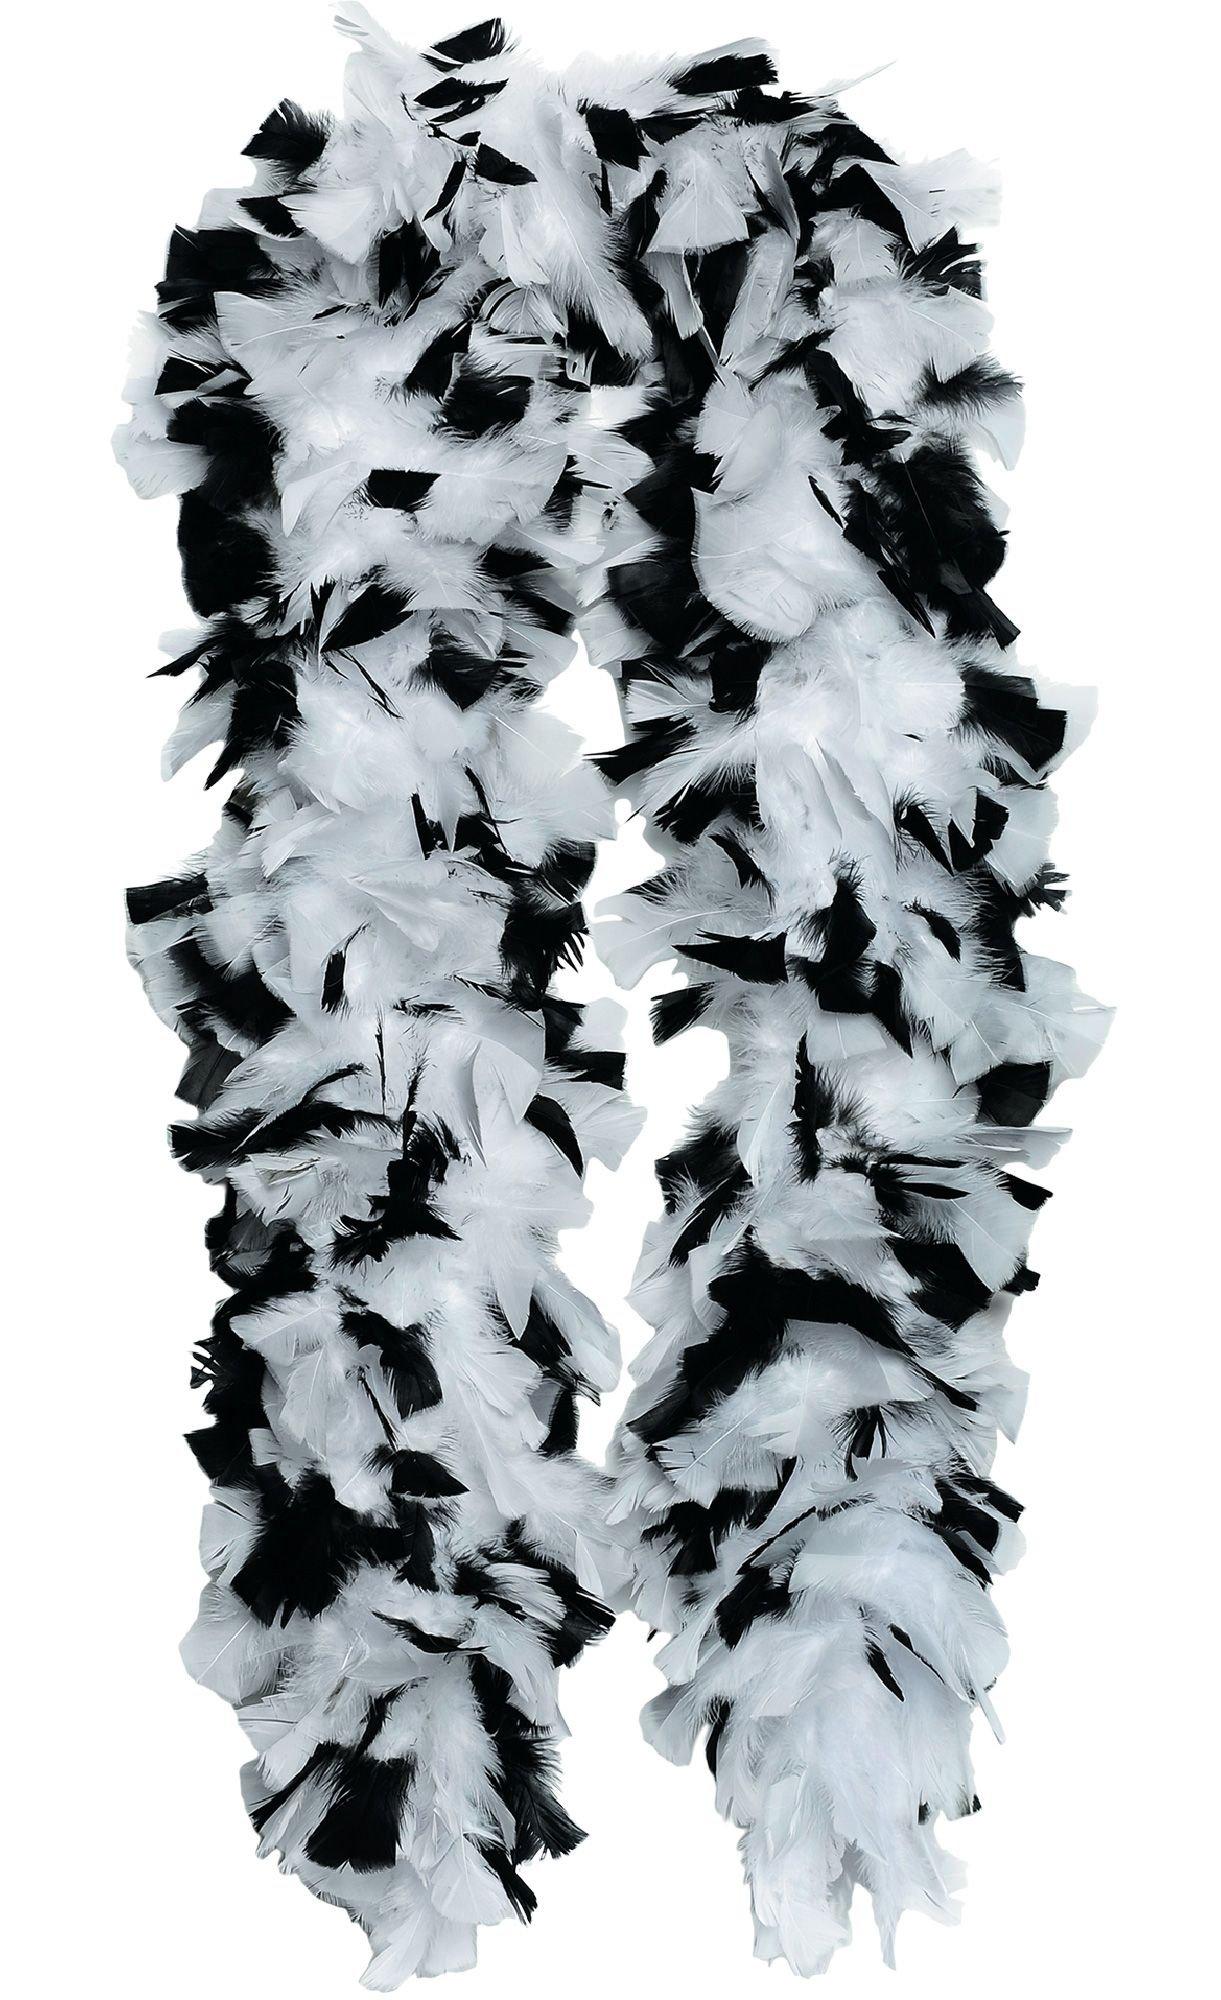 Deluxe Black & White Feather Boa